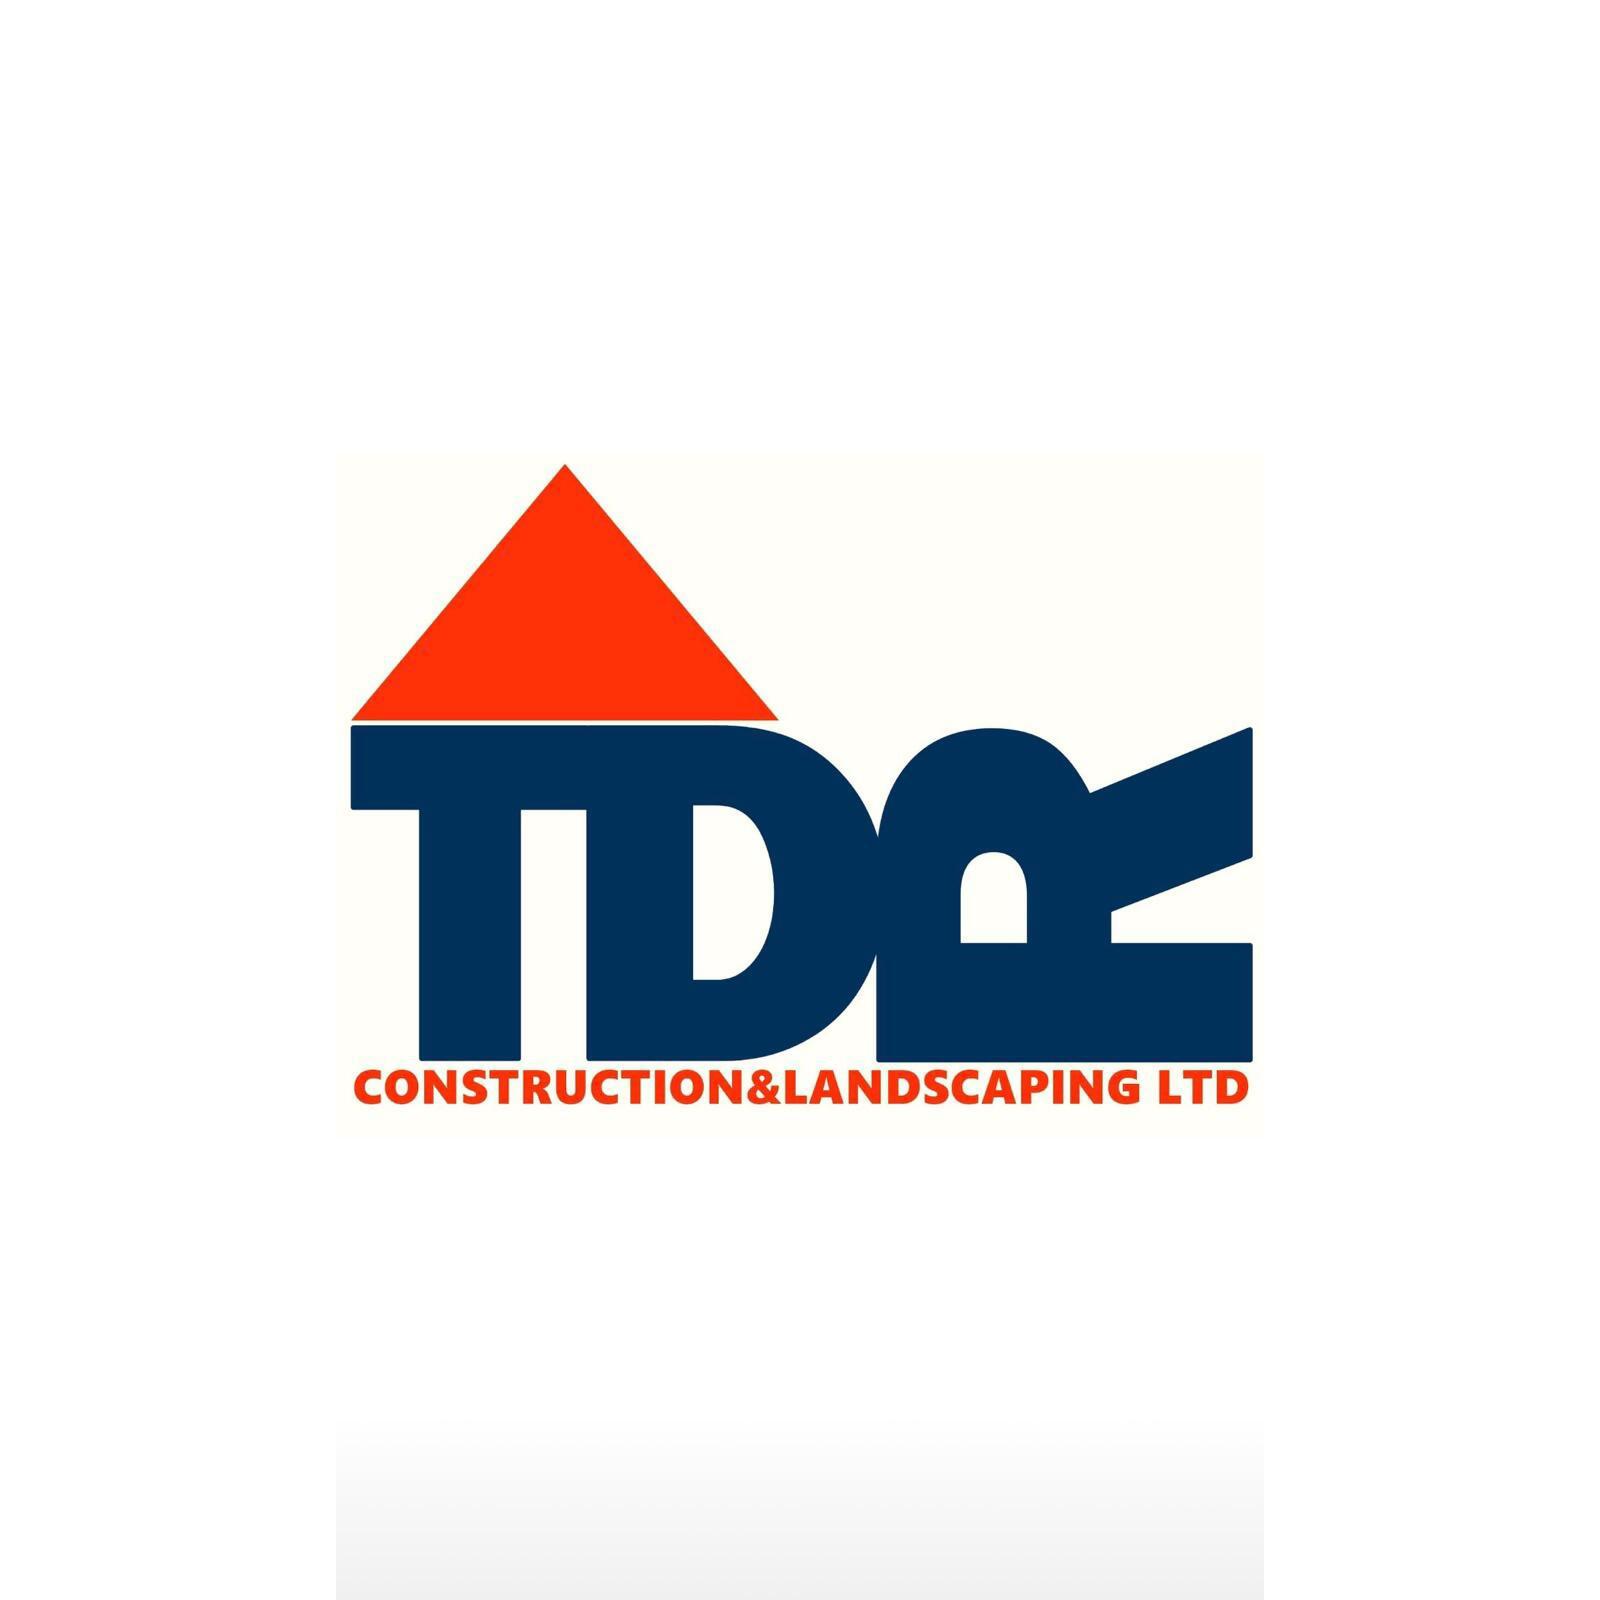 LOGO TDR Construction & Landscaping Ltd London 07796 397117